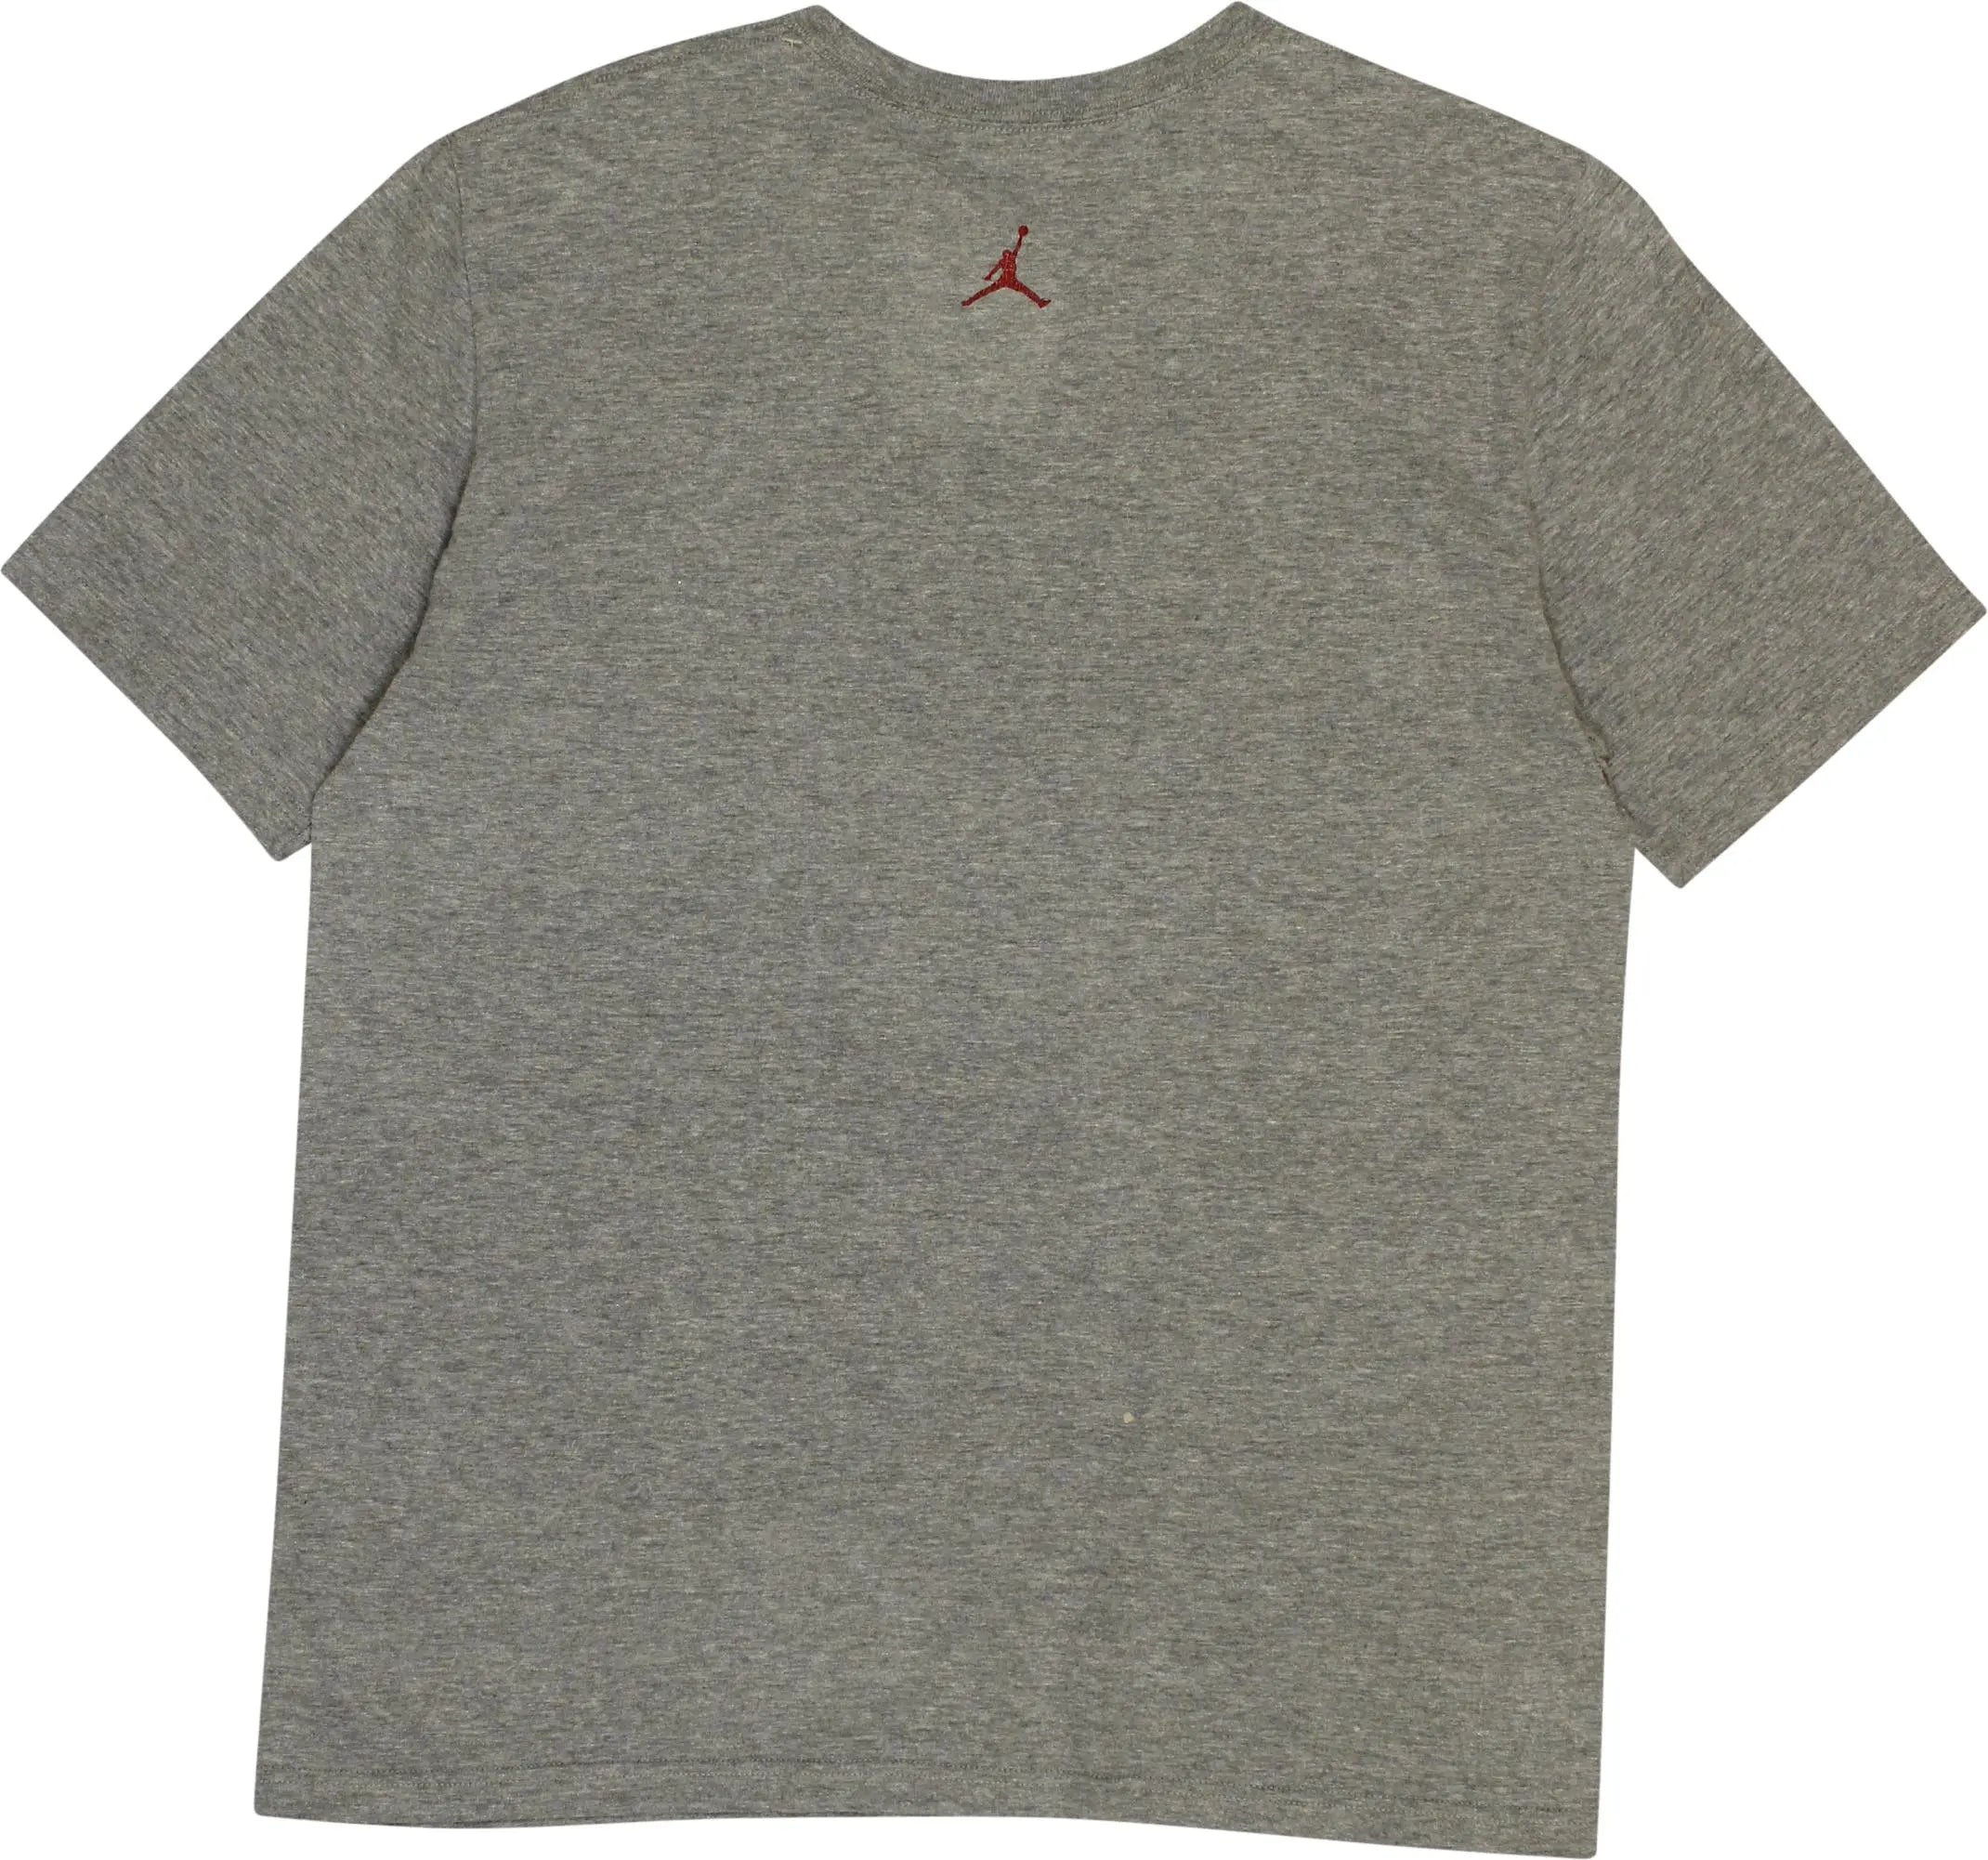 Jordan - T-shirt- ThriftTale.com - Vintage and second handclothing